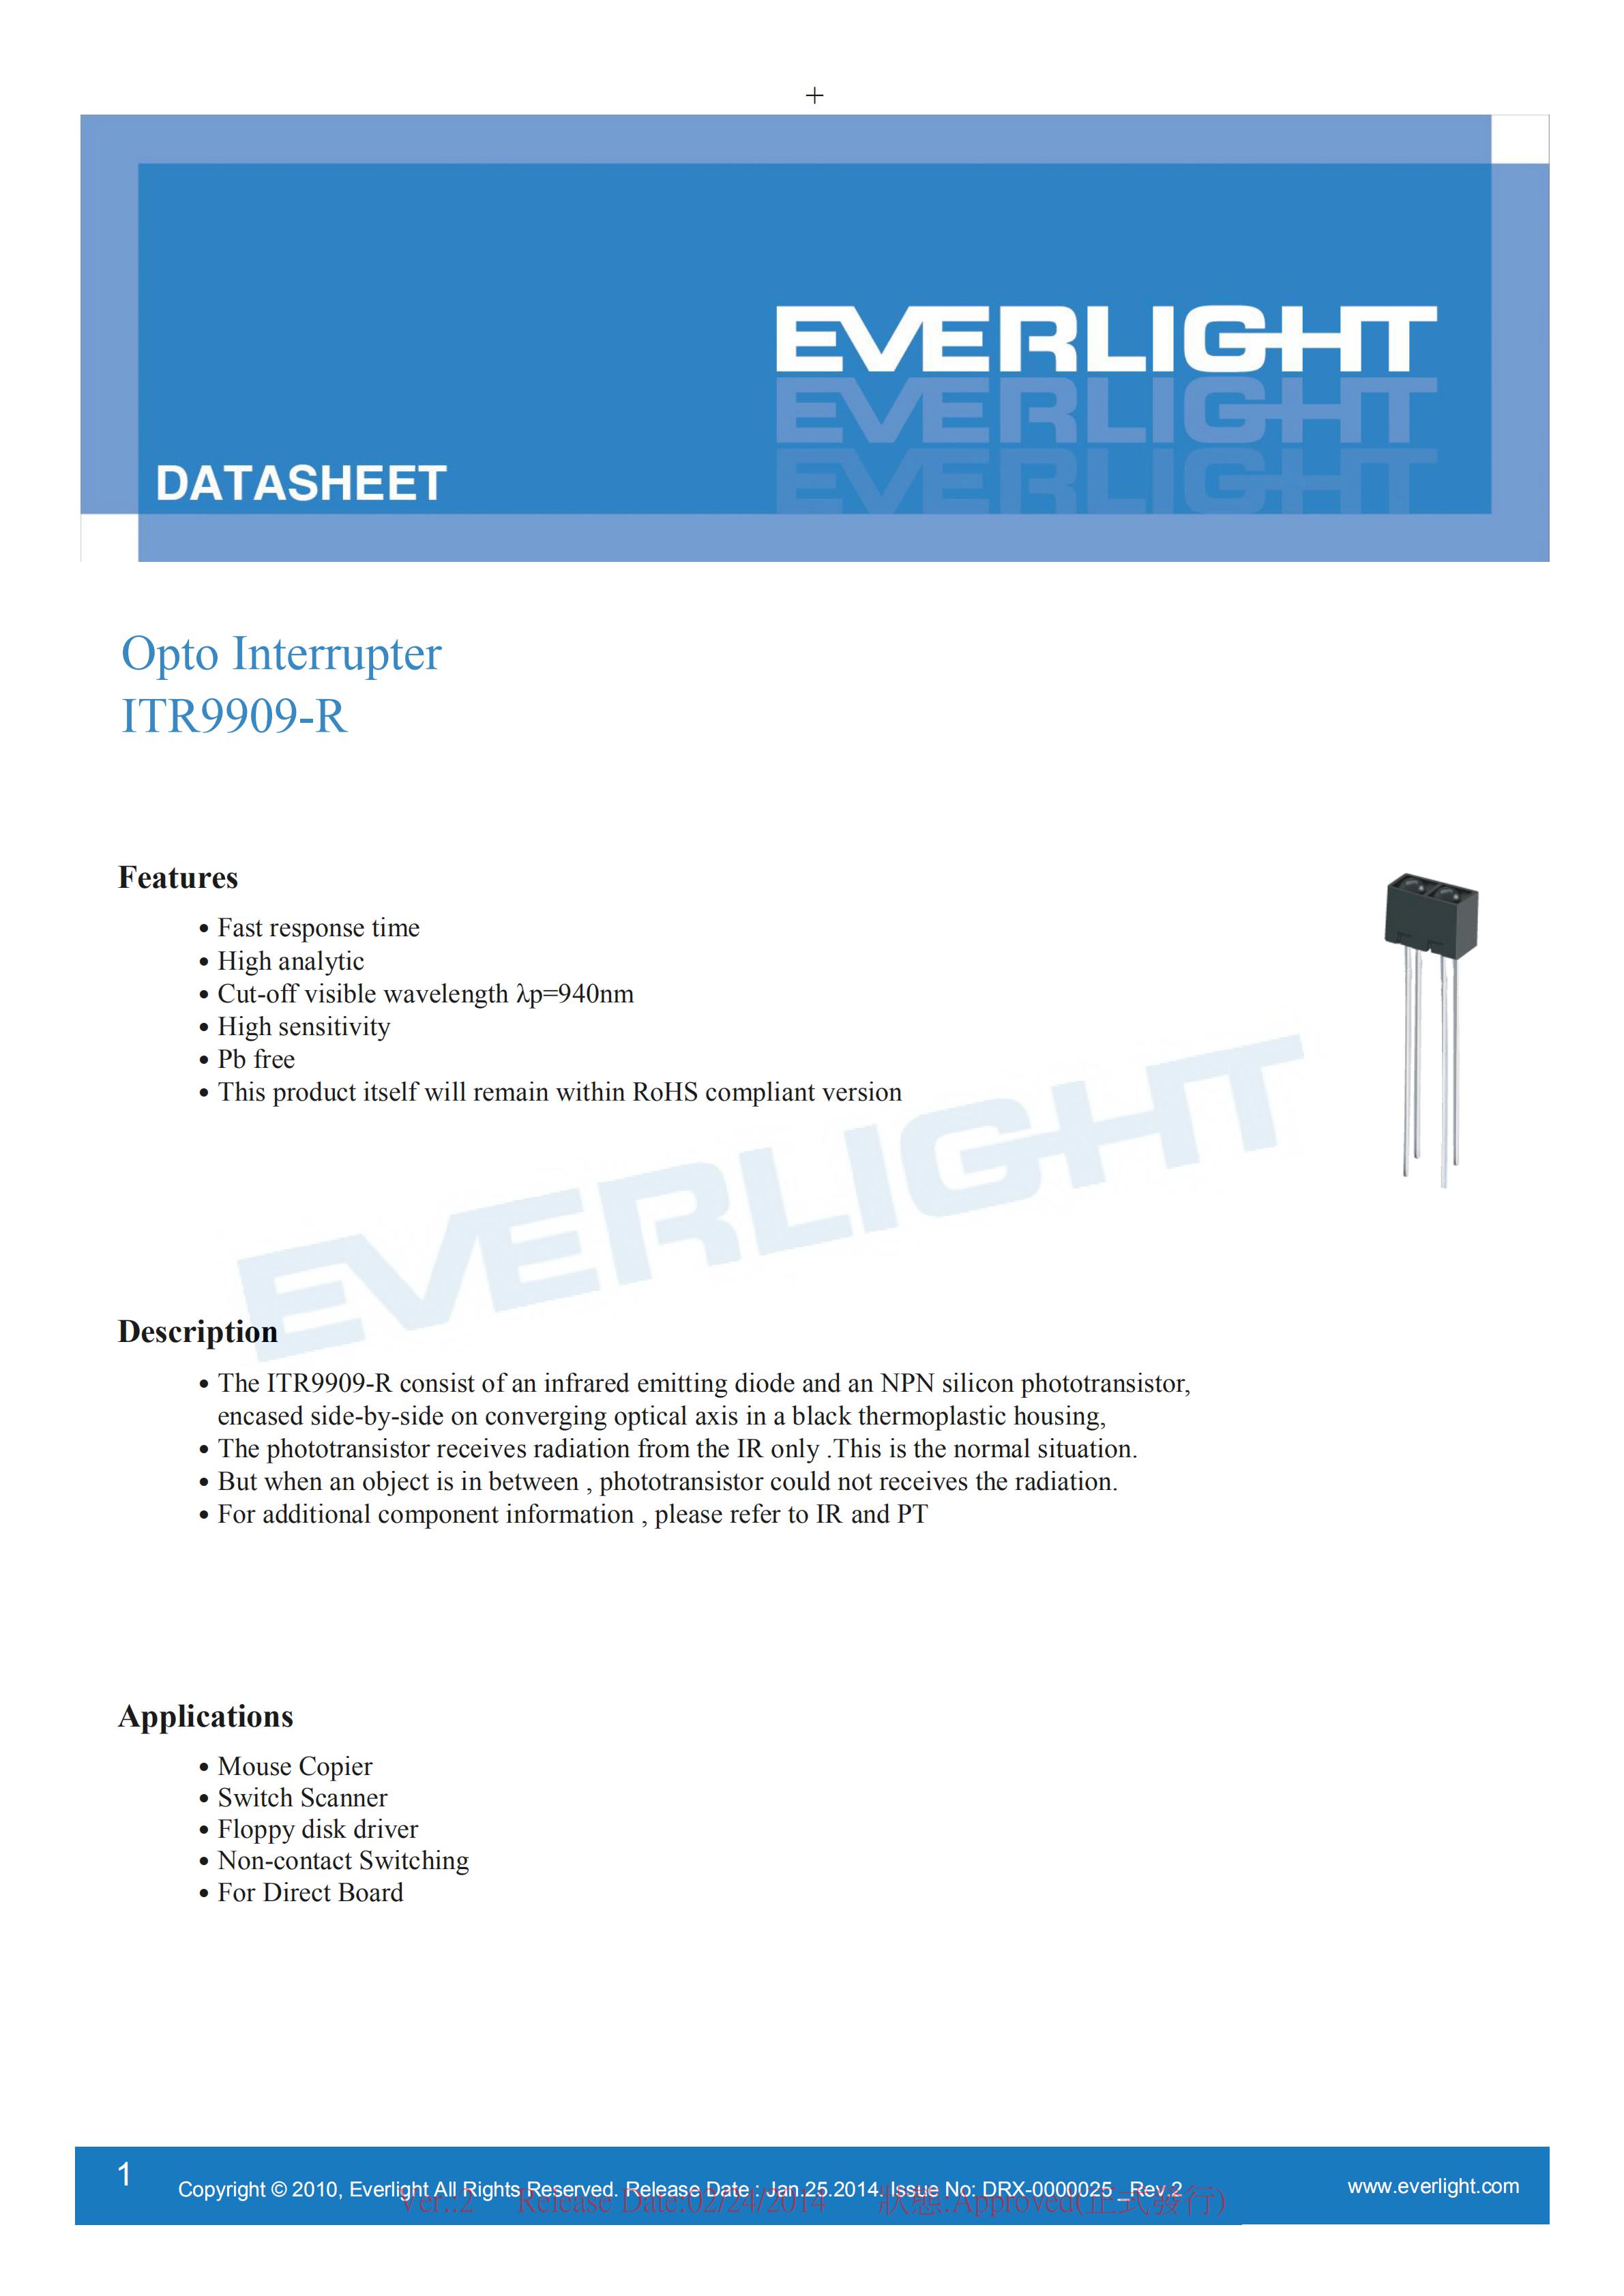 EVERLIGHT Optical Switch ITR9909-R Opto Interrupter Datasheet